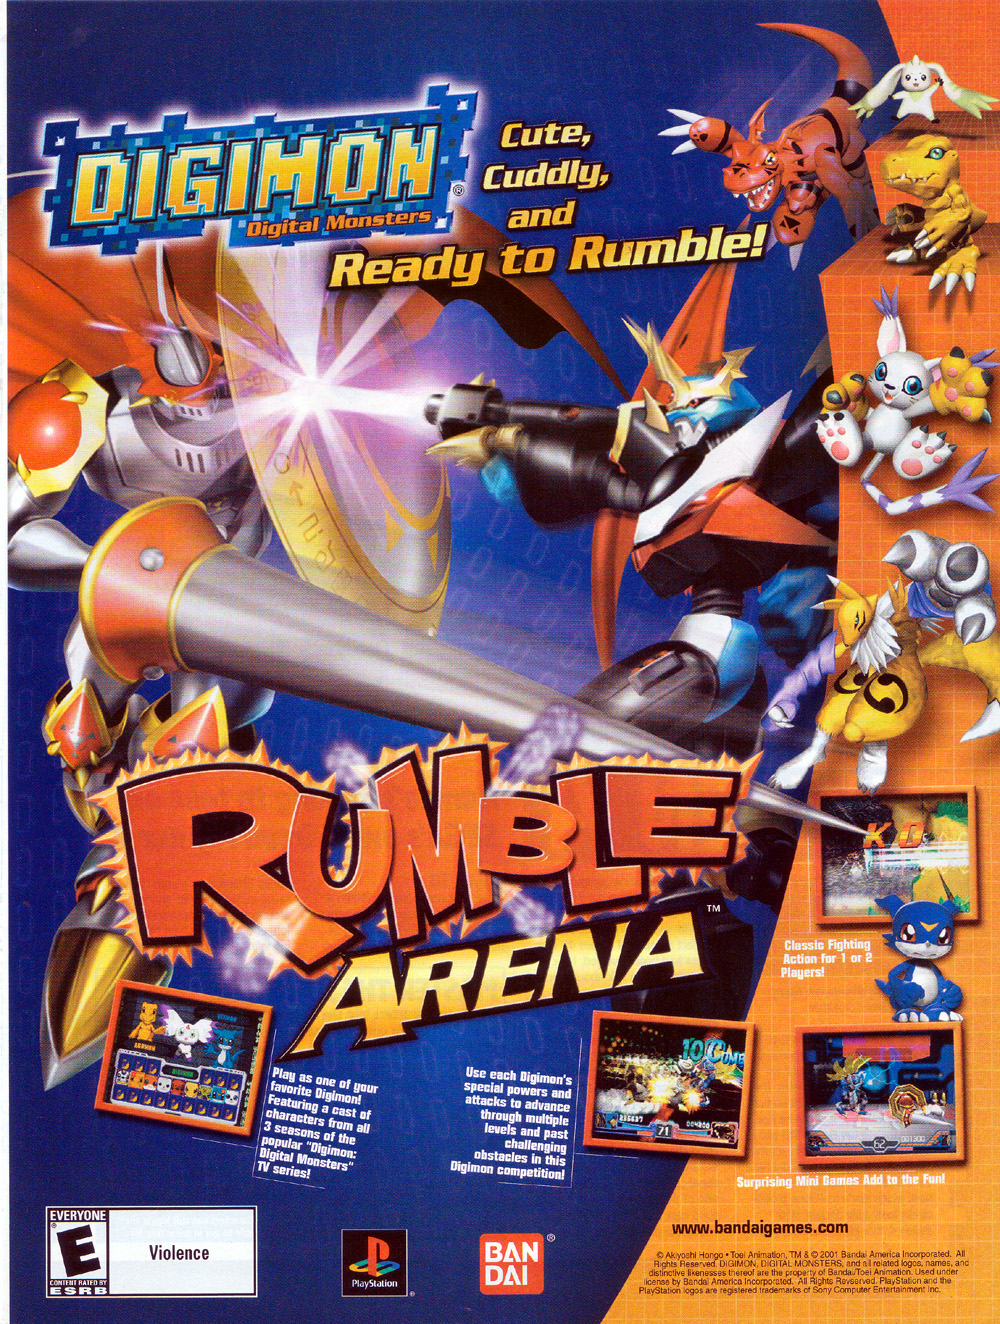 digimon rumble arena 2 ps1